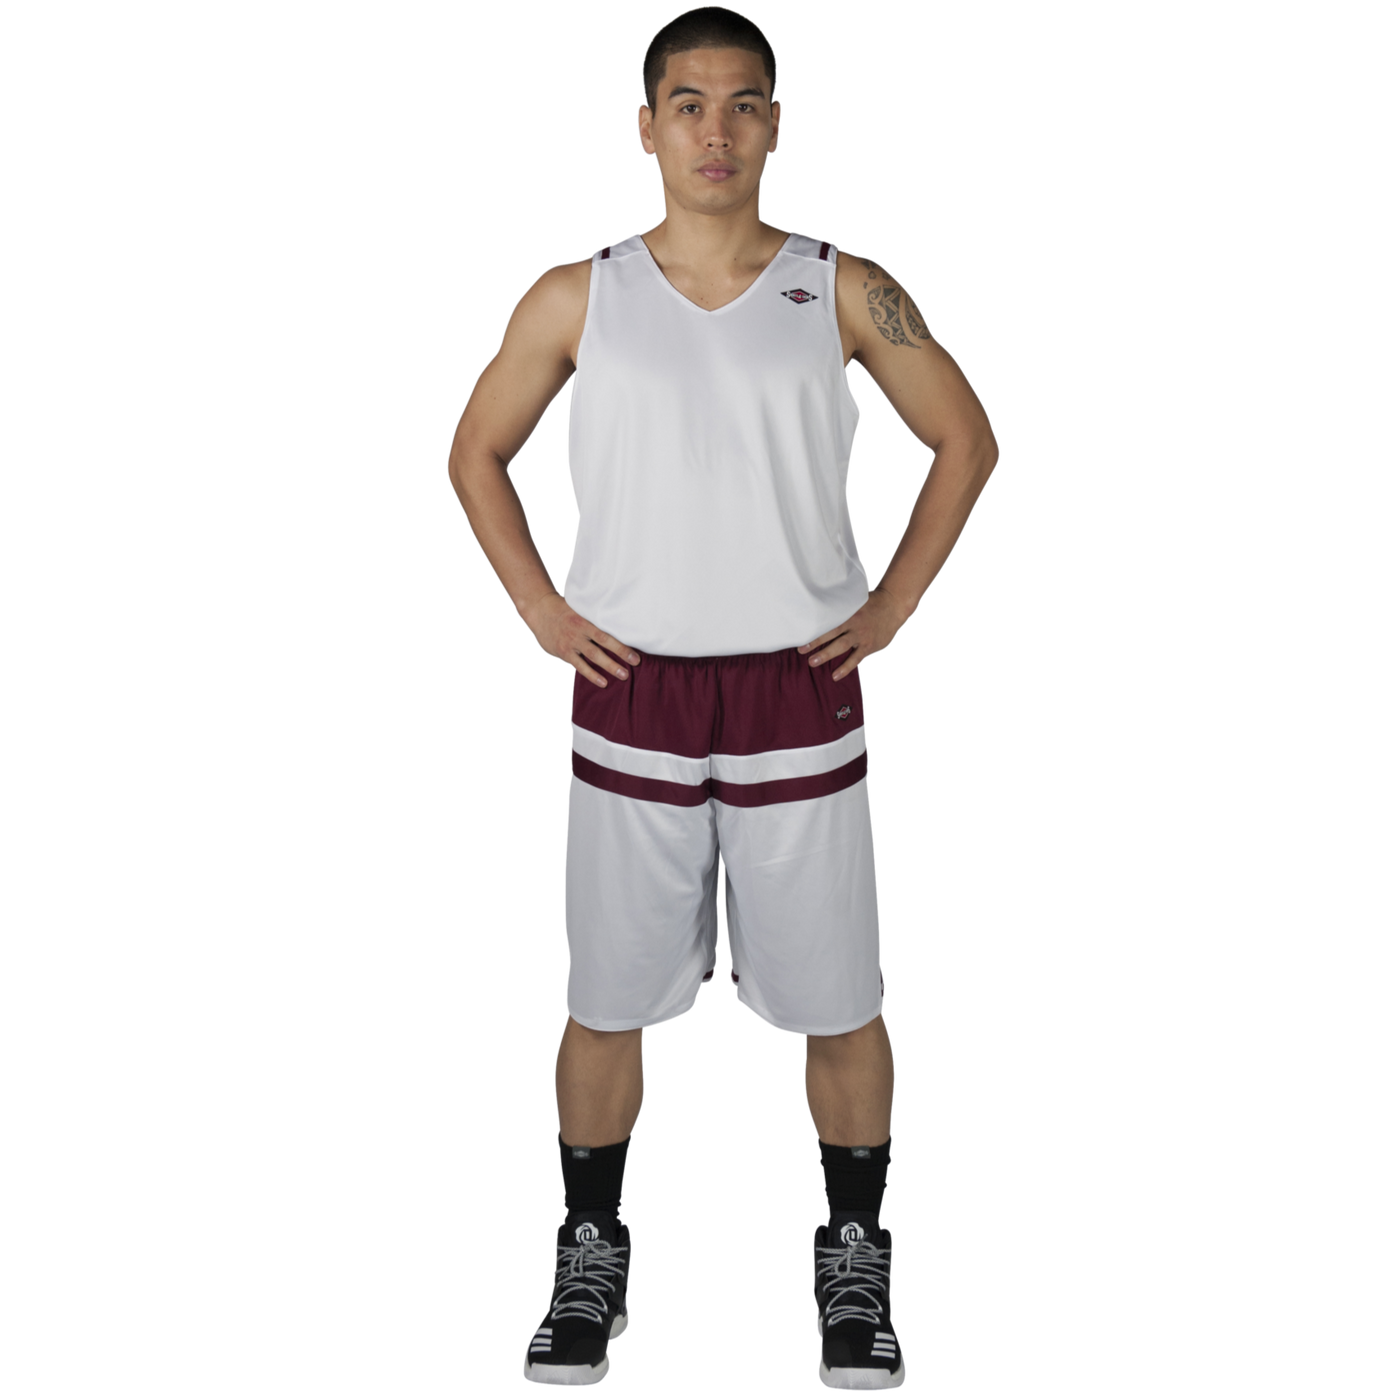 Shirts & Skins Cardinal/White All-Star Reversible Basketball Uniform